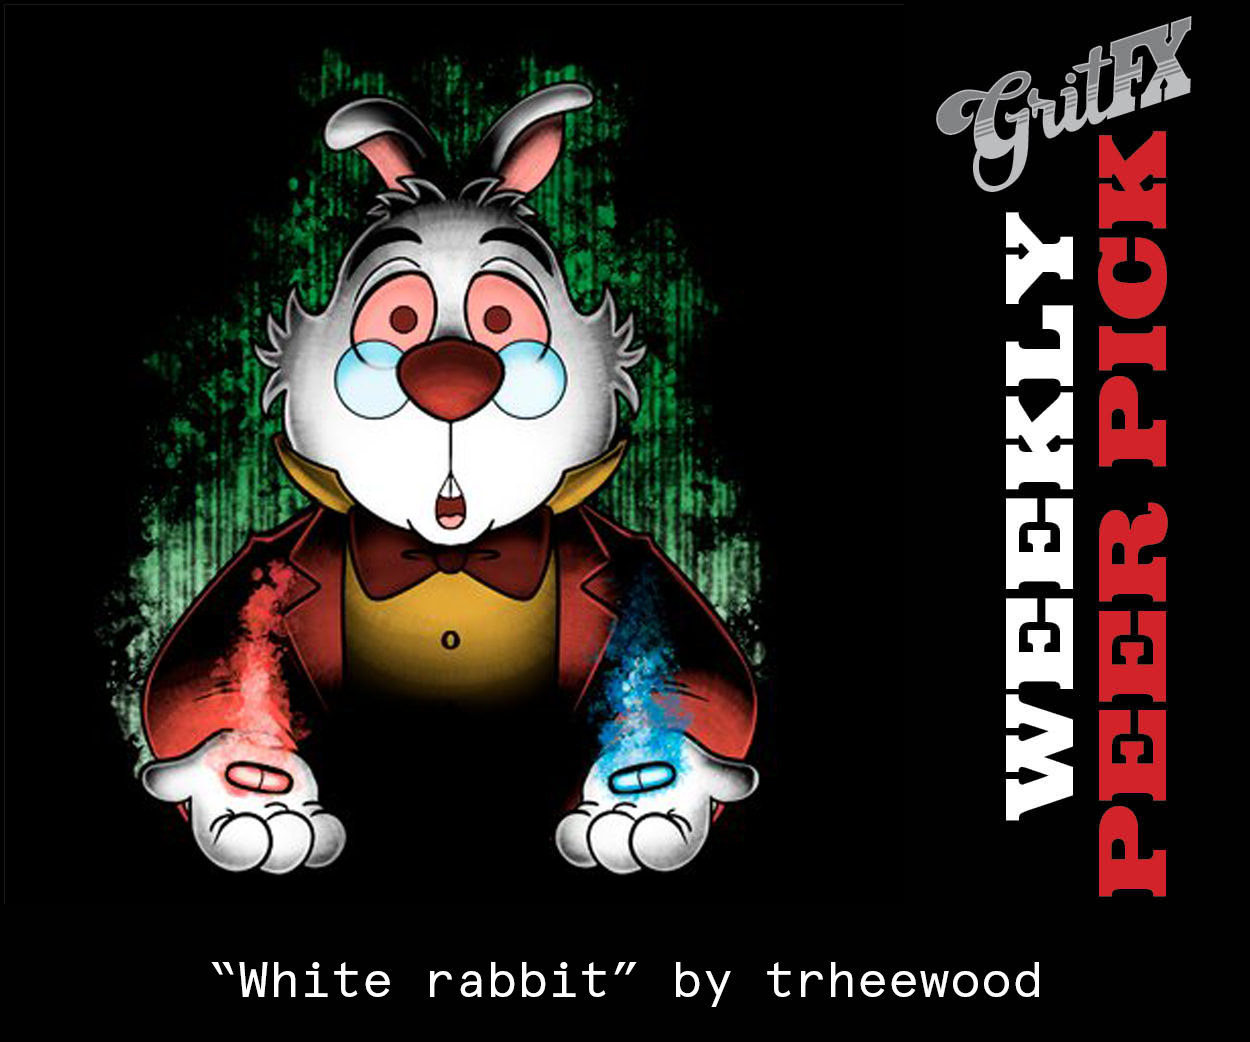 White rabbit - by trheewood